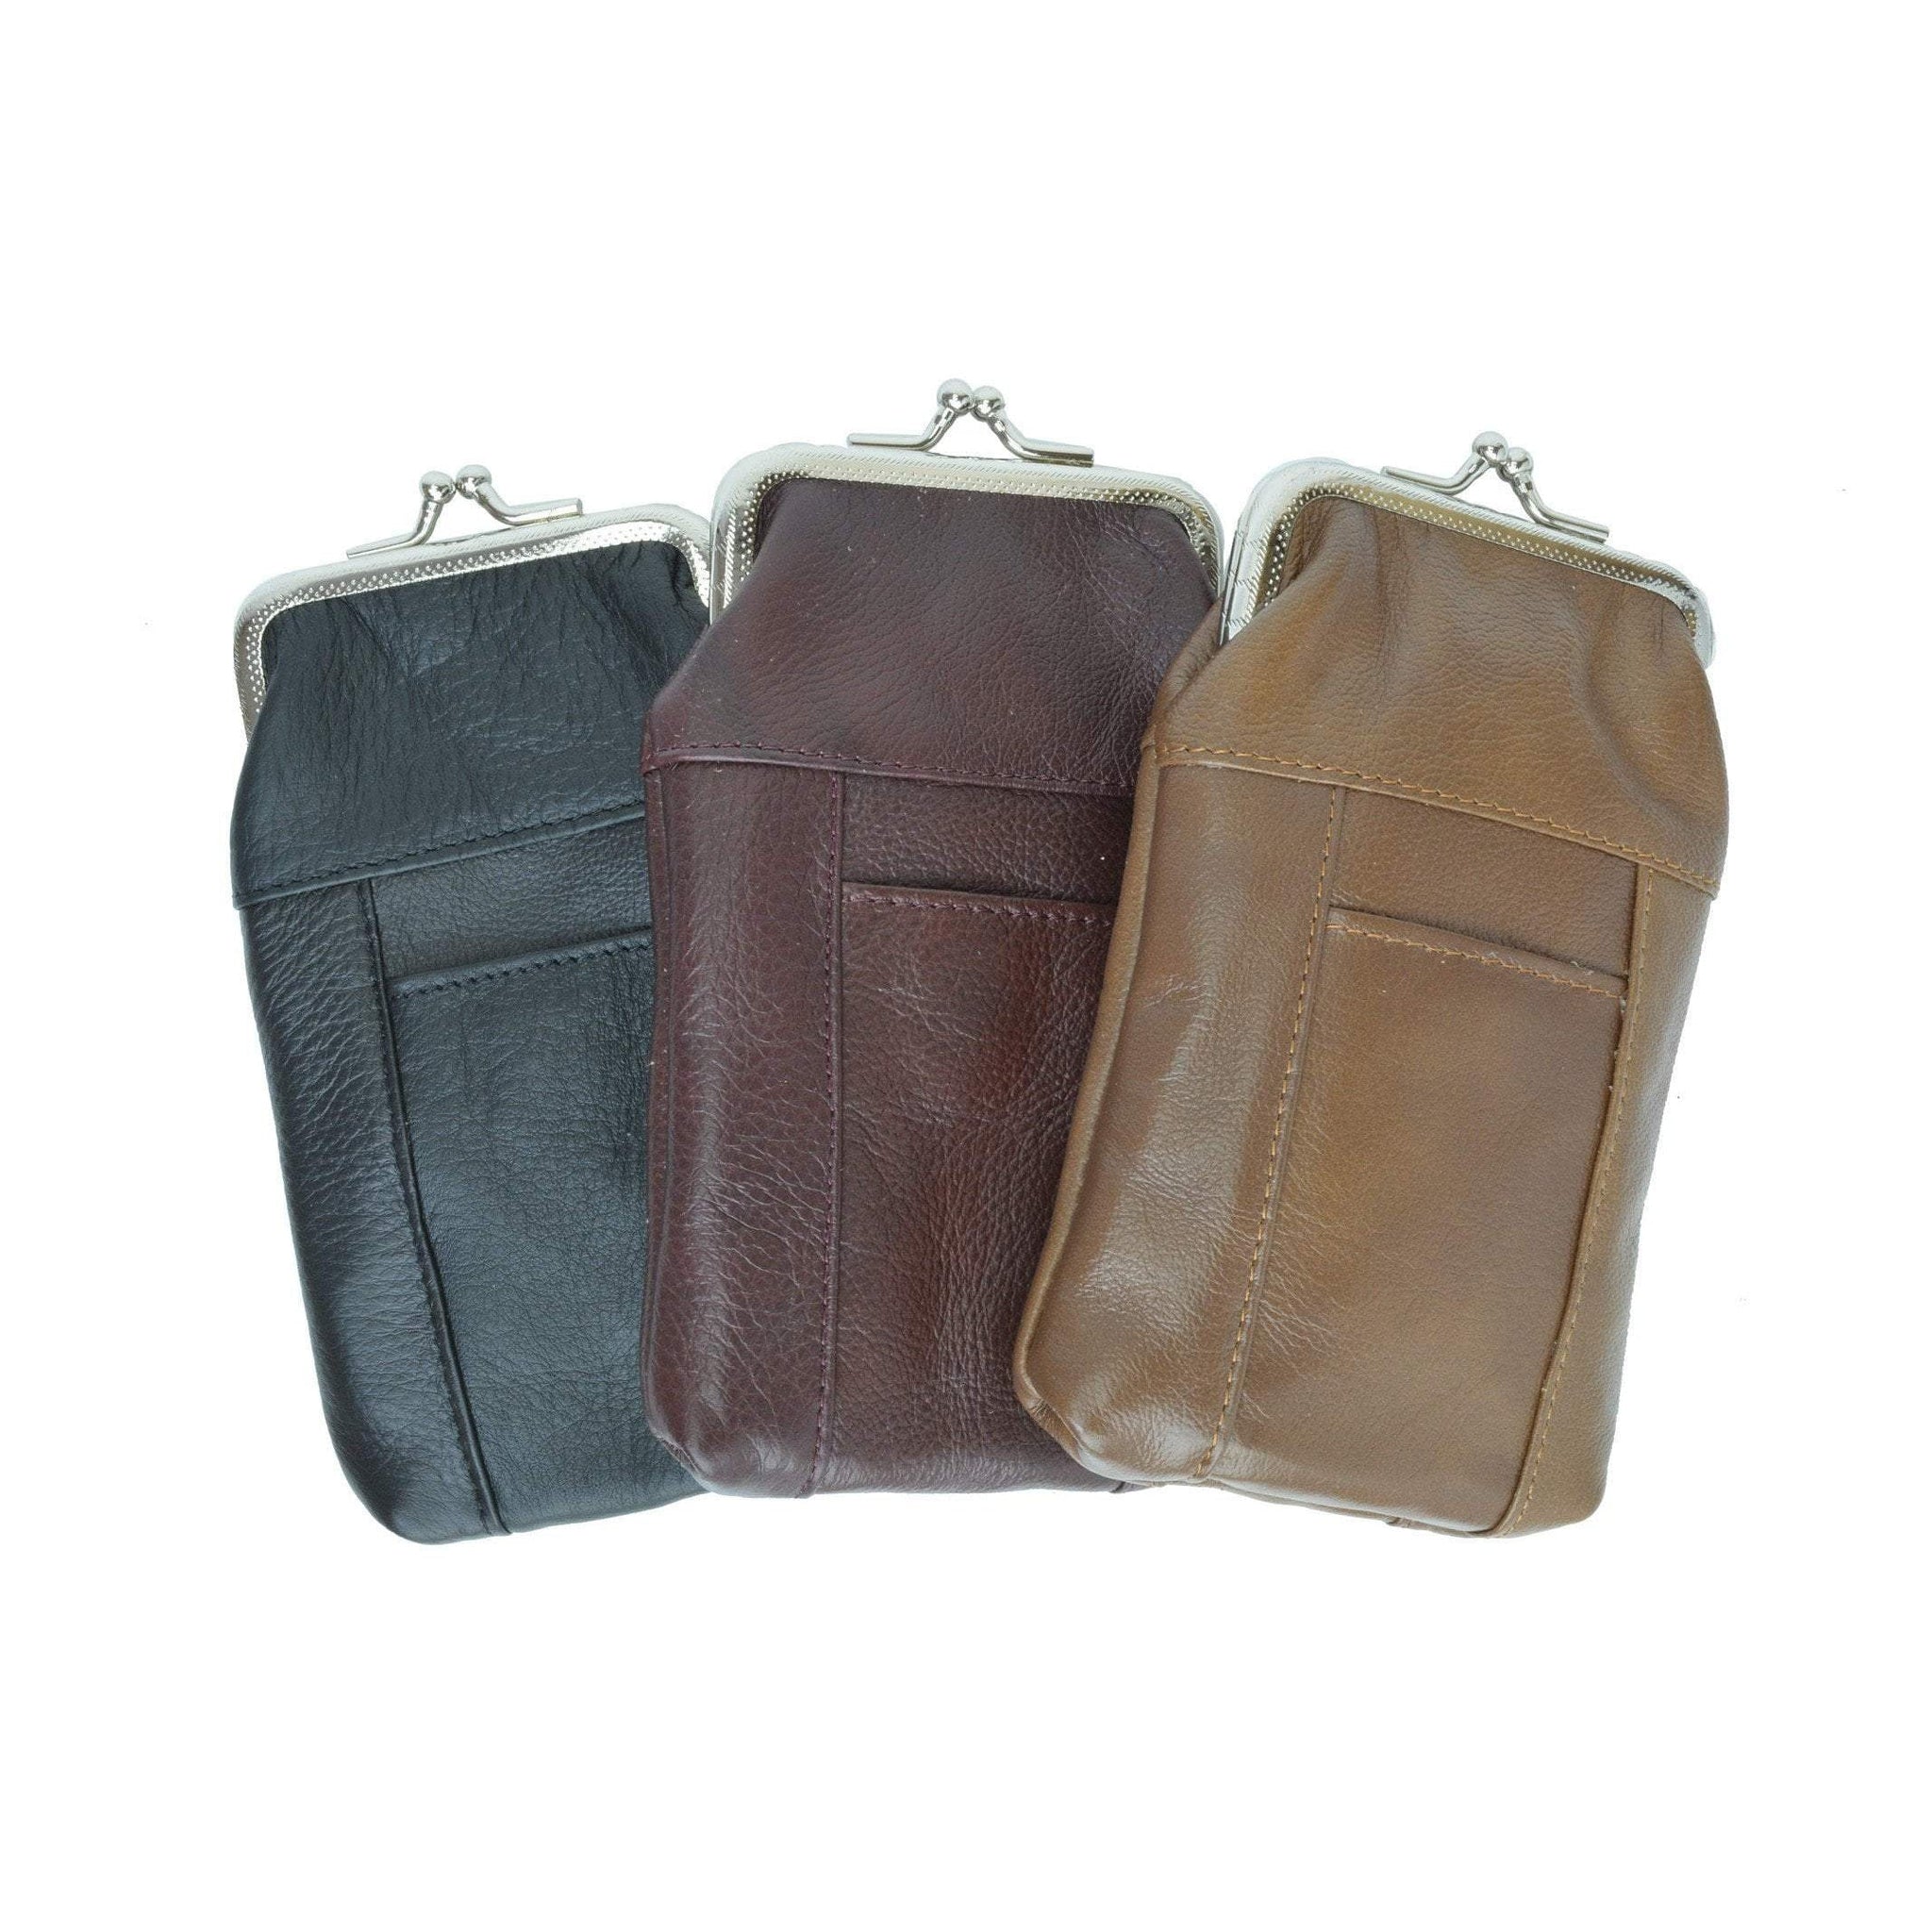 Leather Cigarette case Pack Holder with Lighter Pocket by Marshal